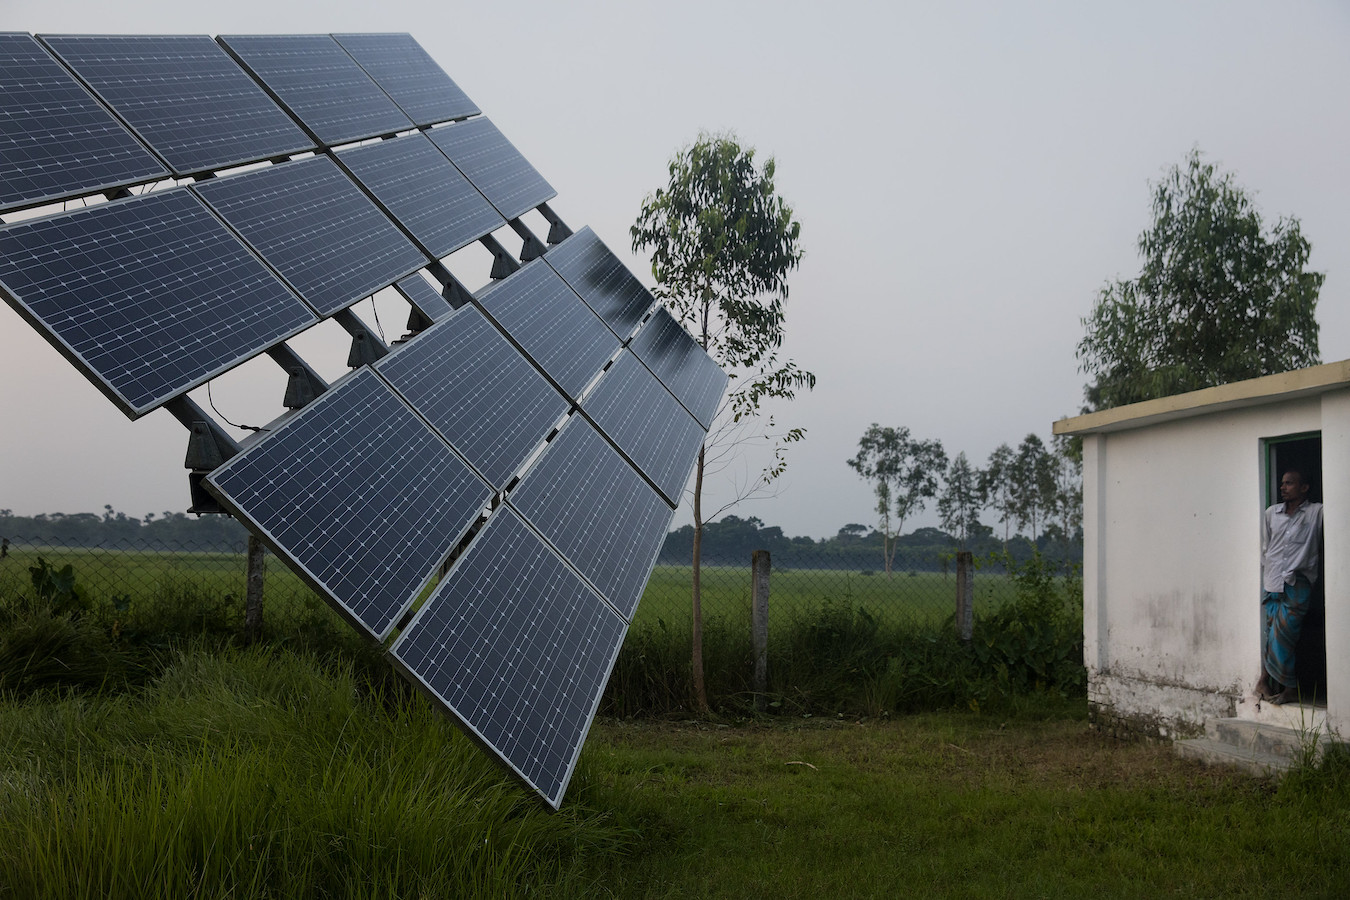 Solar panels on a farm in Rohertek, Bangladesh. Photo by Dominic Chavez, World Bank